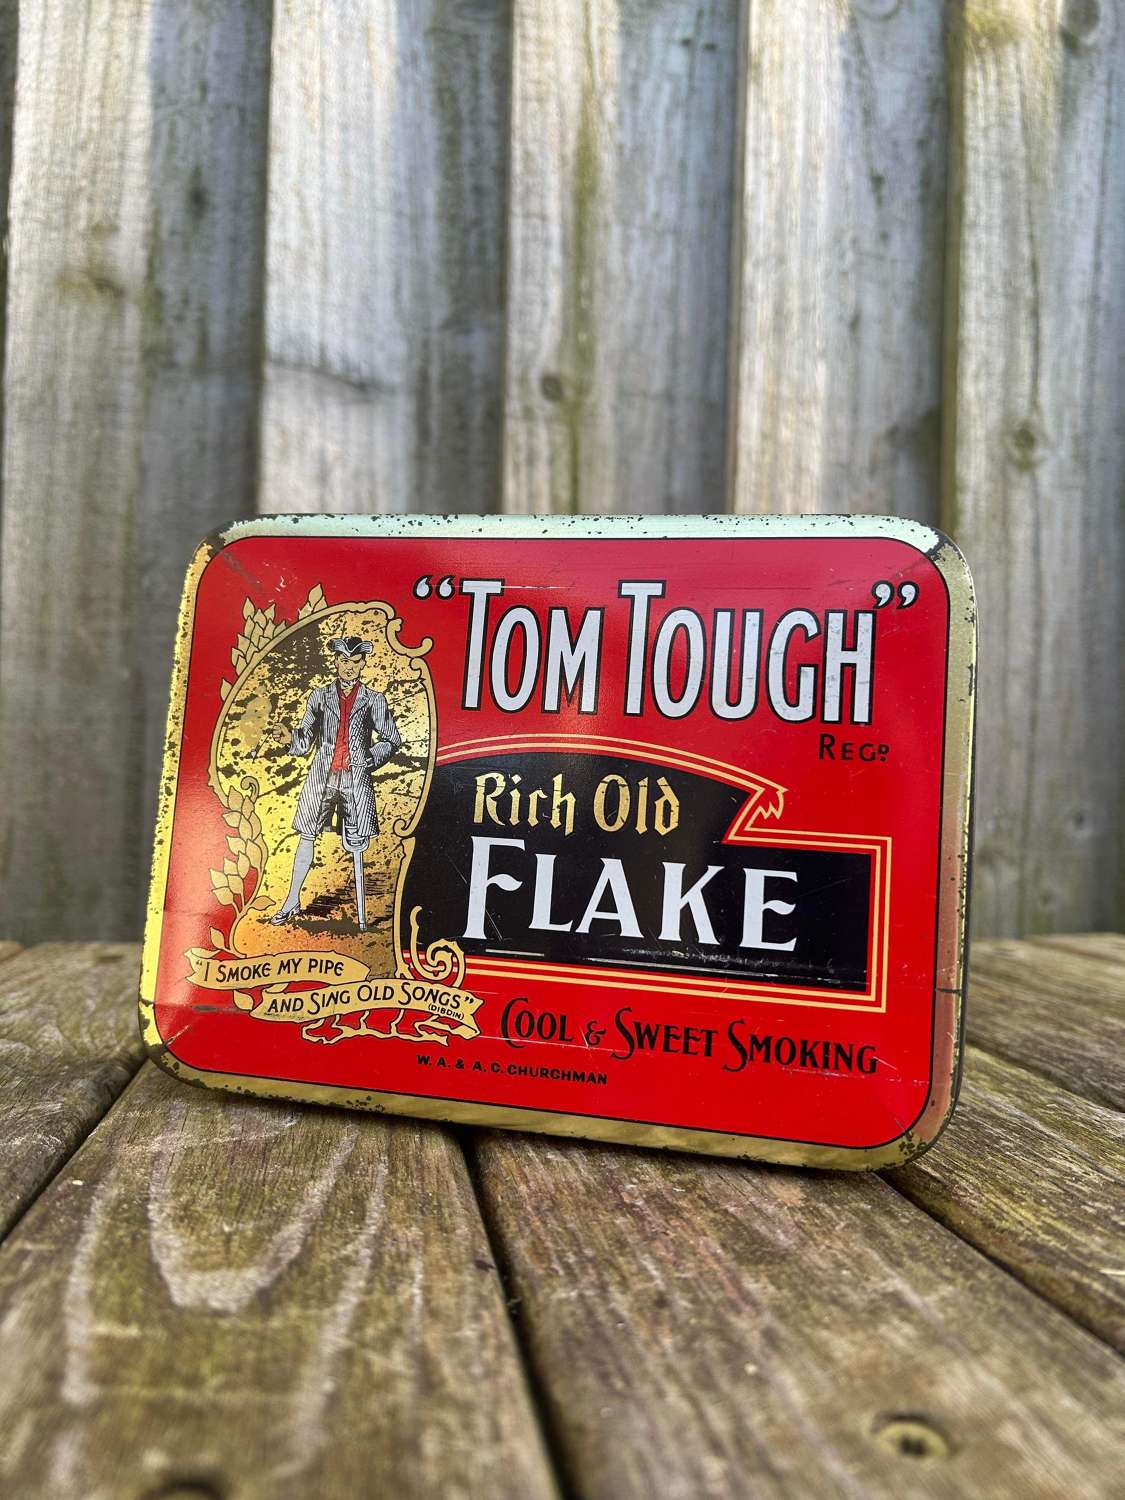 Tom tough flake tobacco tin